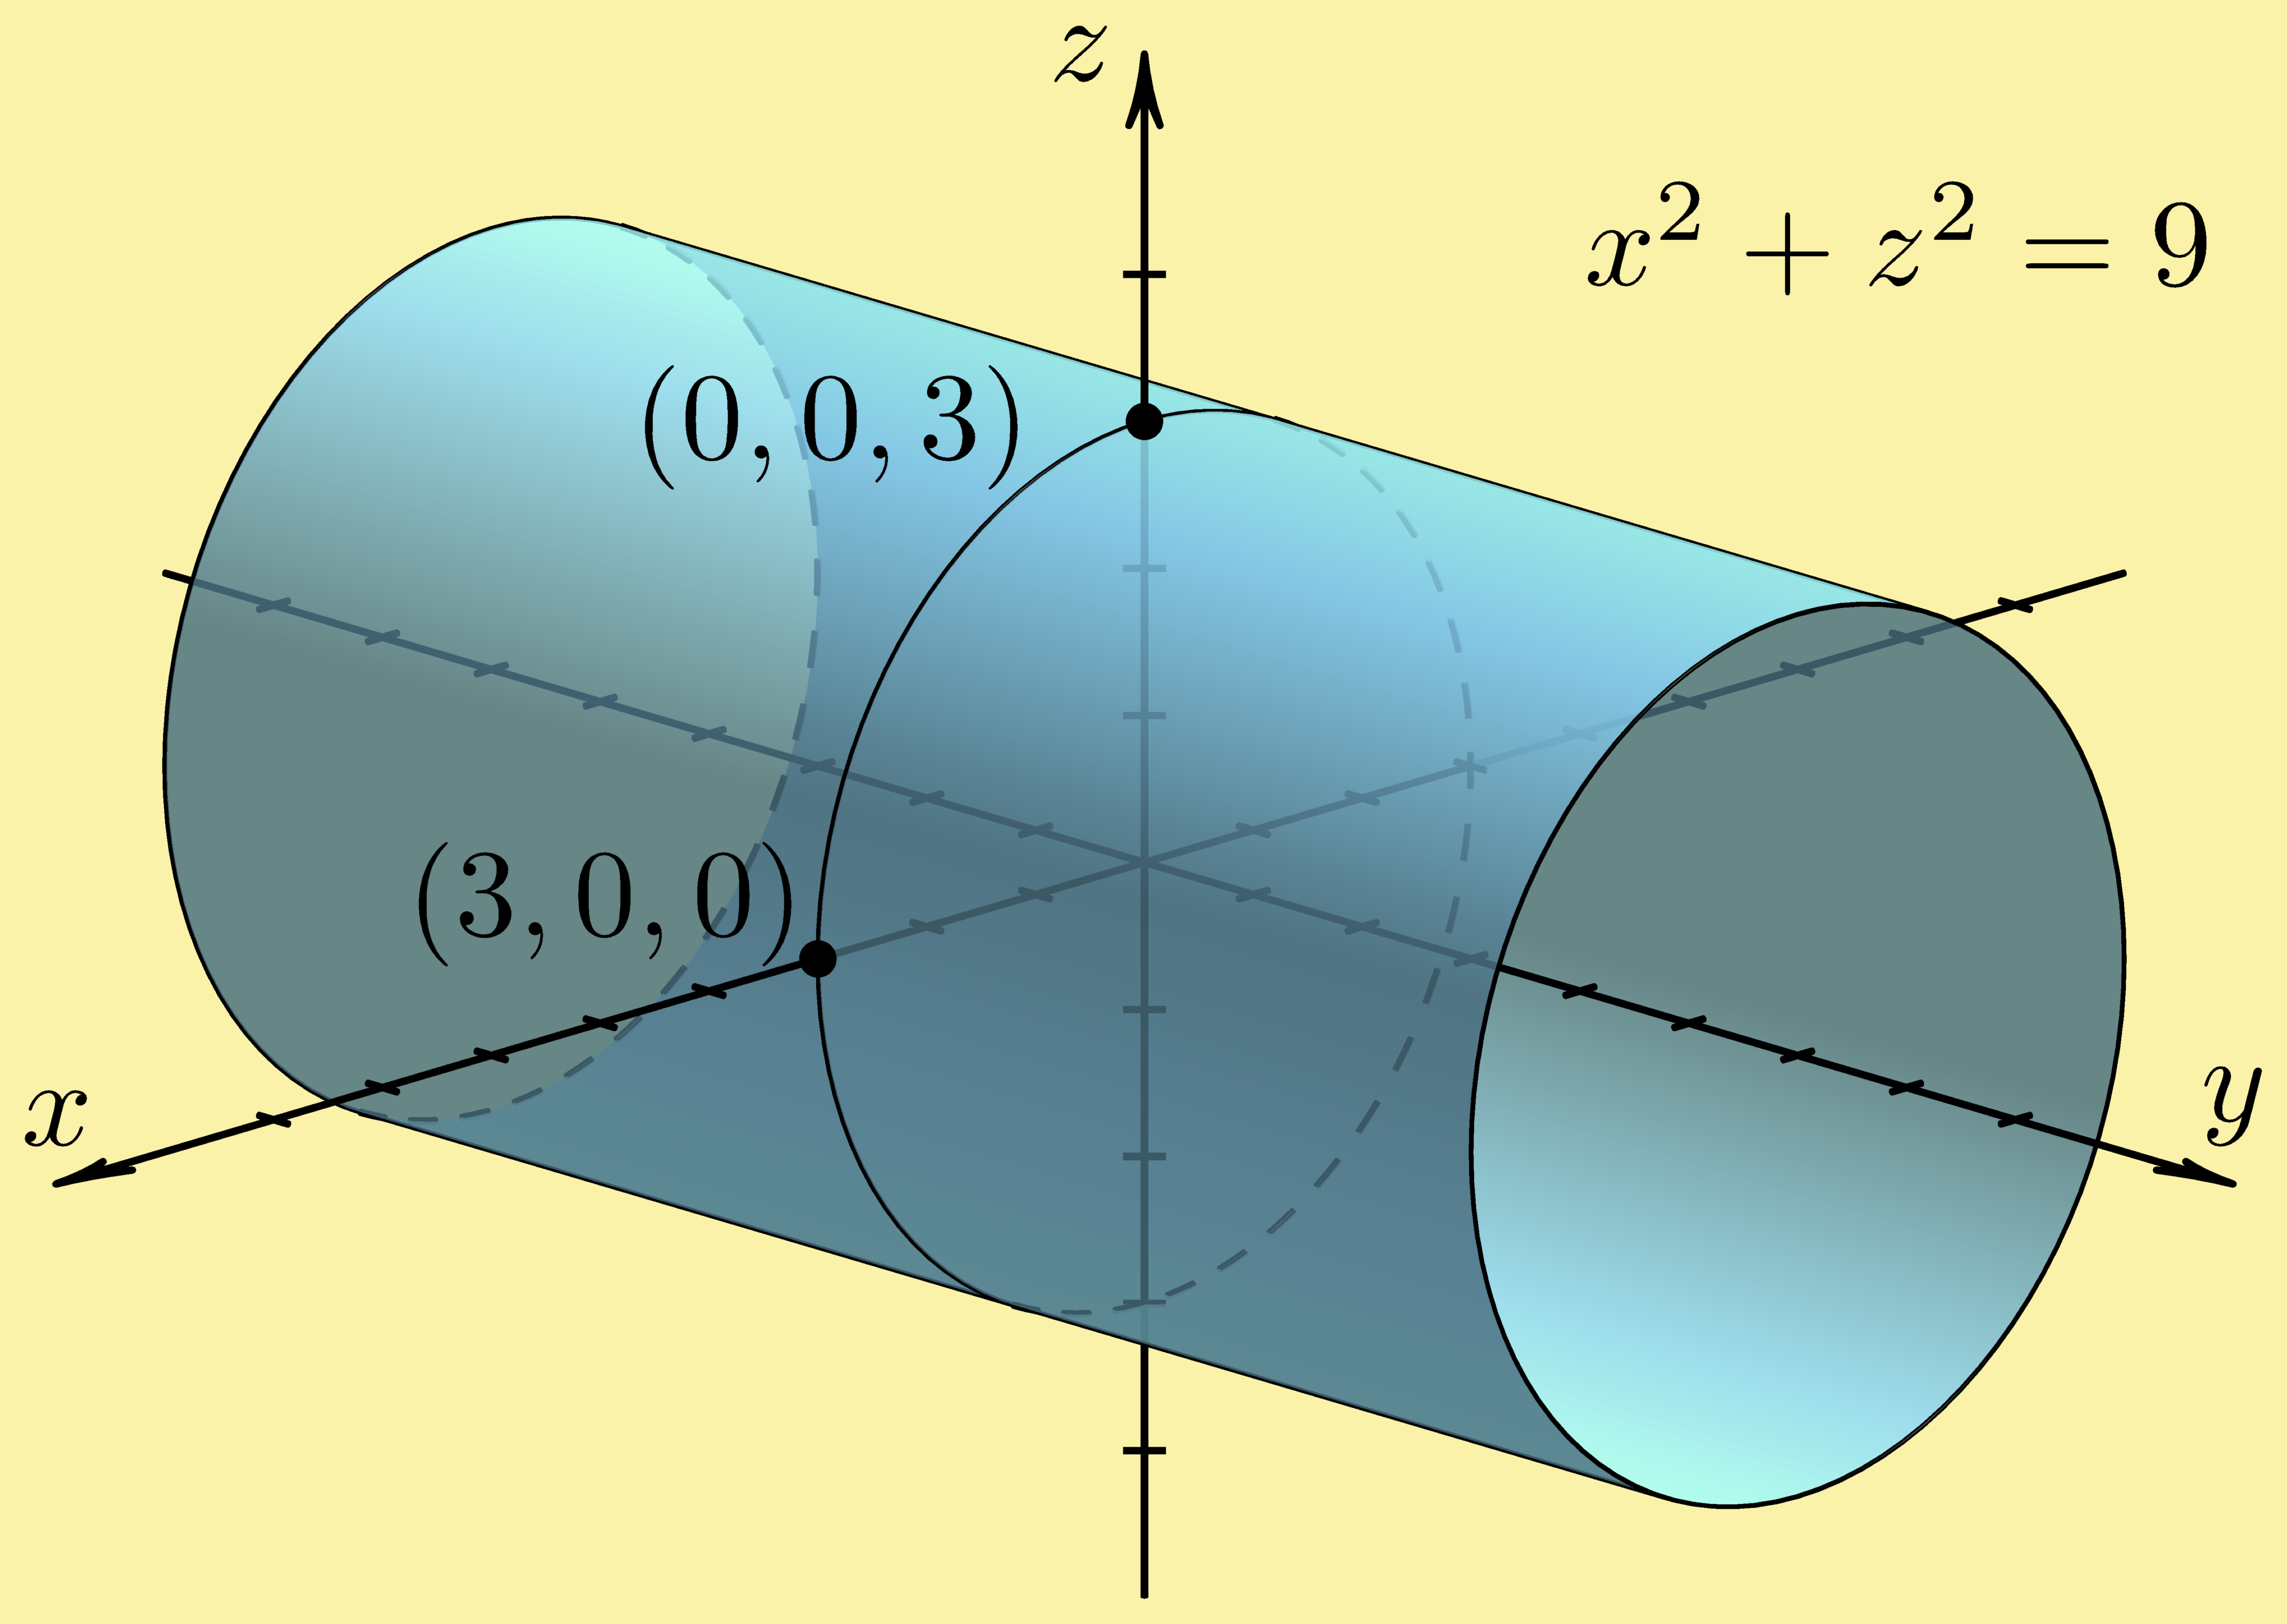 circular cylinder 3-space coordinate system xyz R3 Cartesian three-space